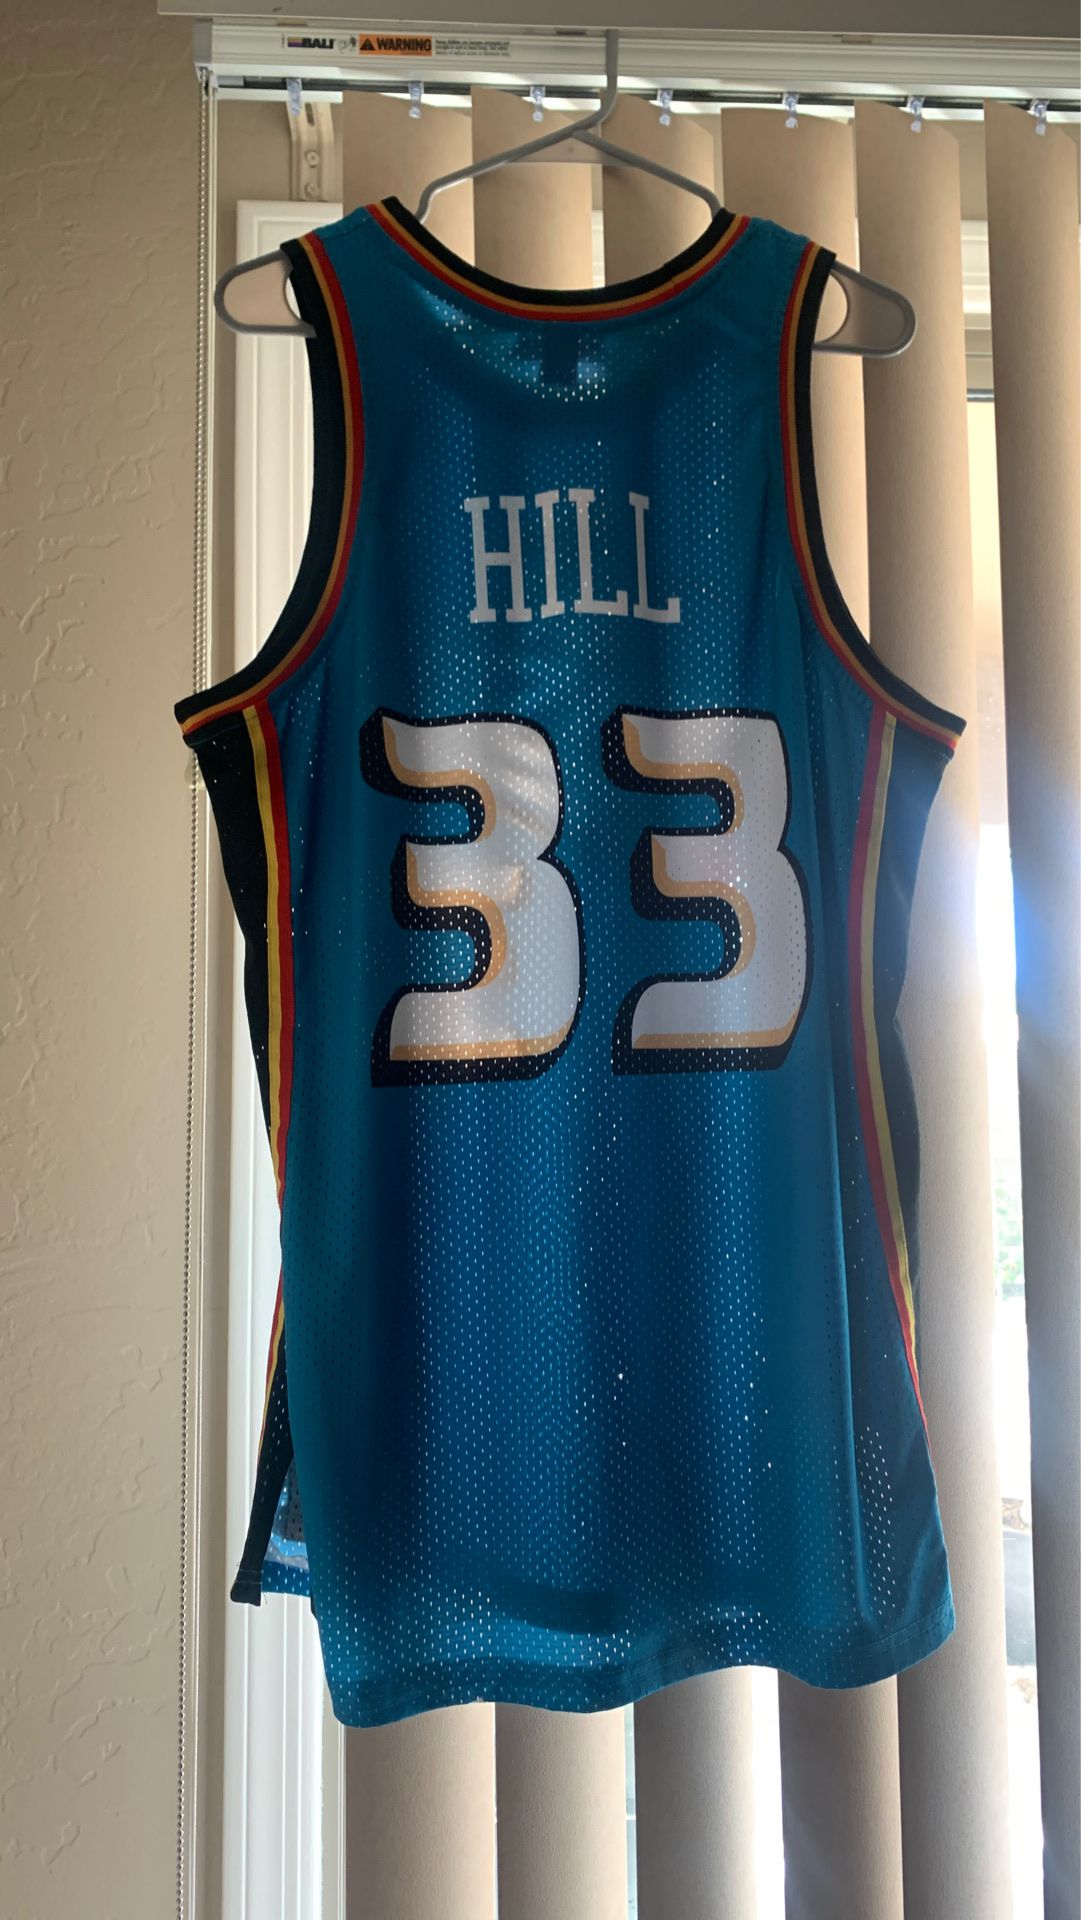 Grant Hill Hardwood Classic Jersey size XL